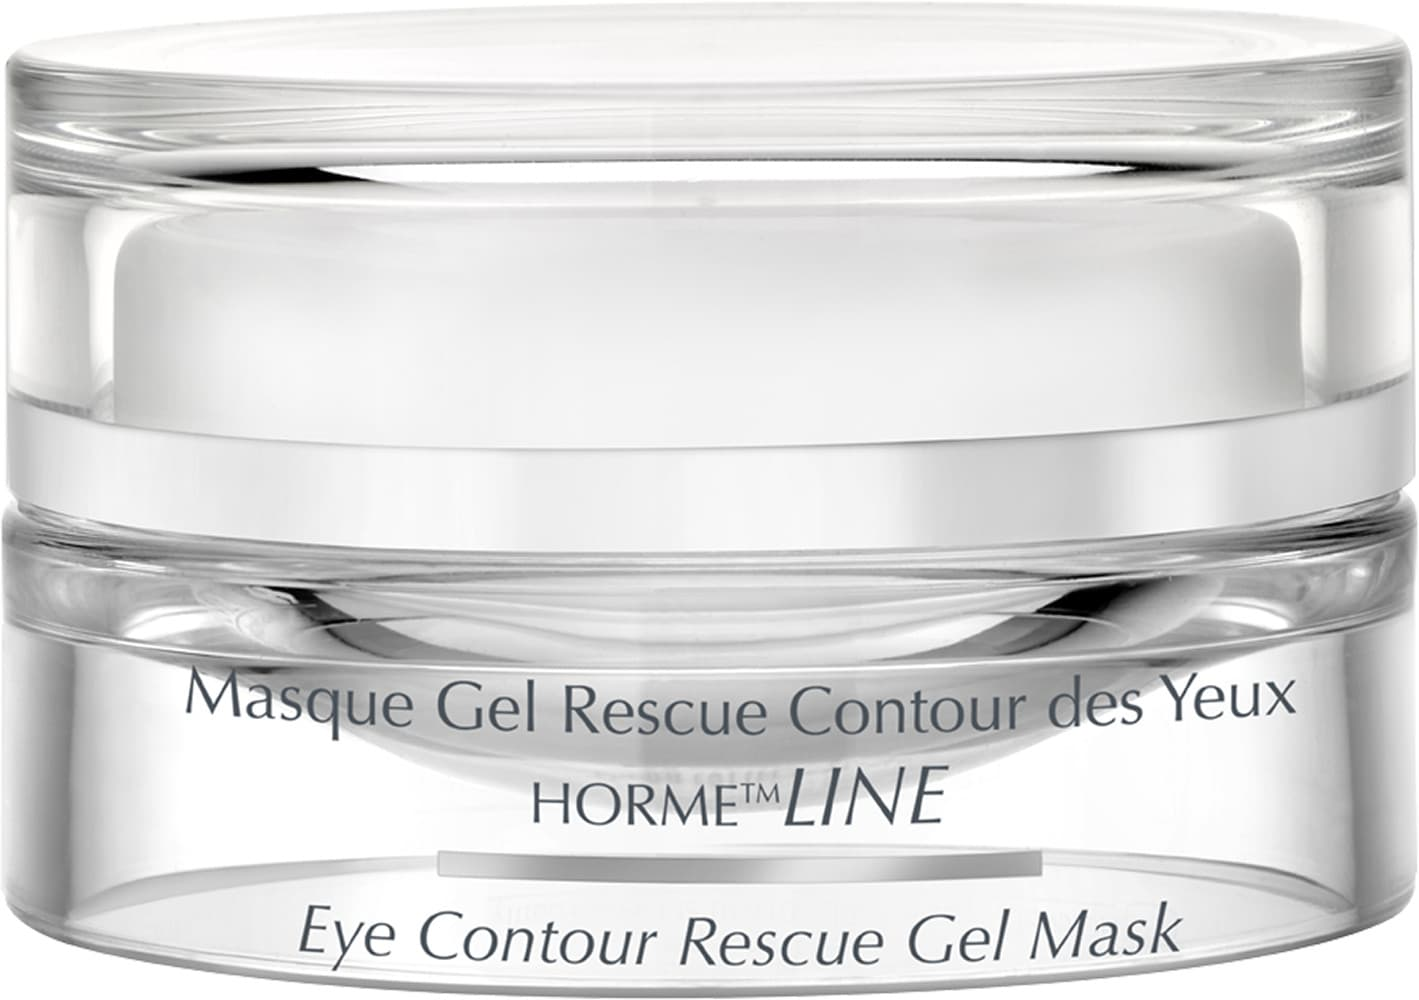 Horme Line Masque Gel Rescue Contour Des Yeux Маска-гель Спасатель для контура глаз, 15мл